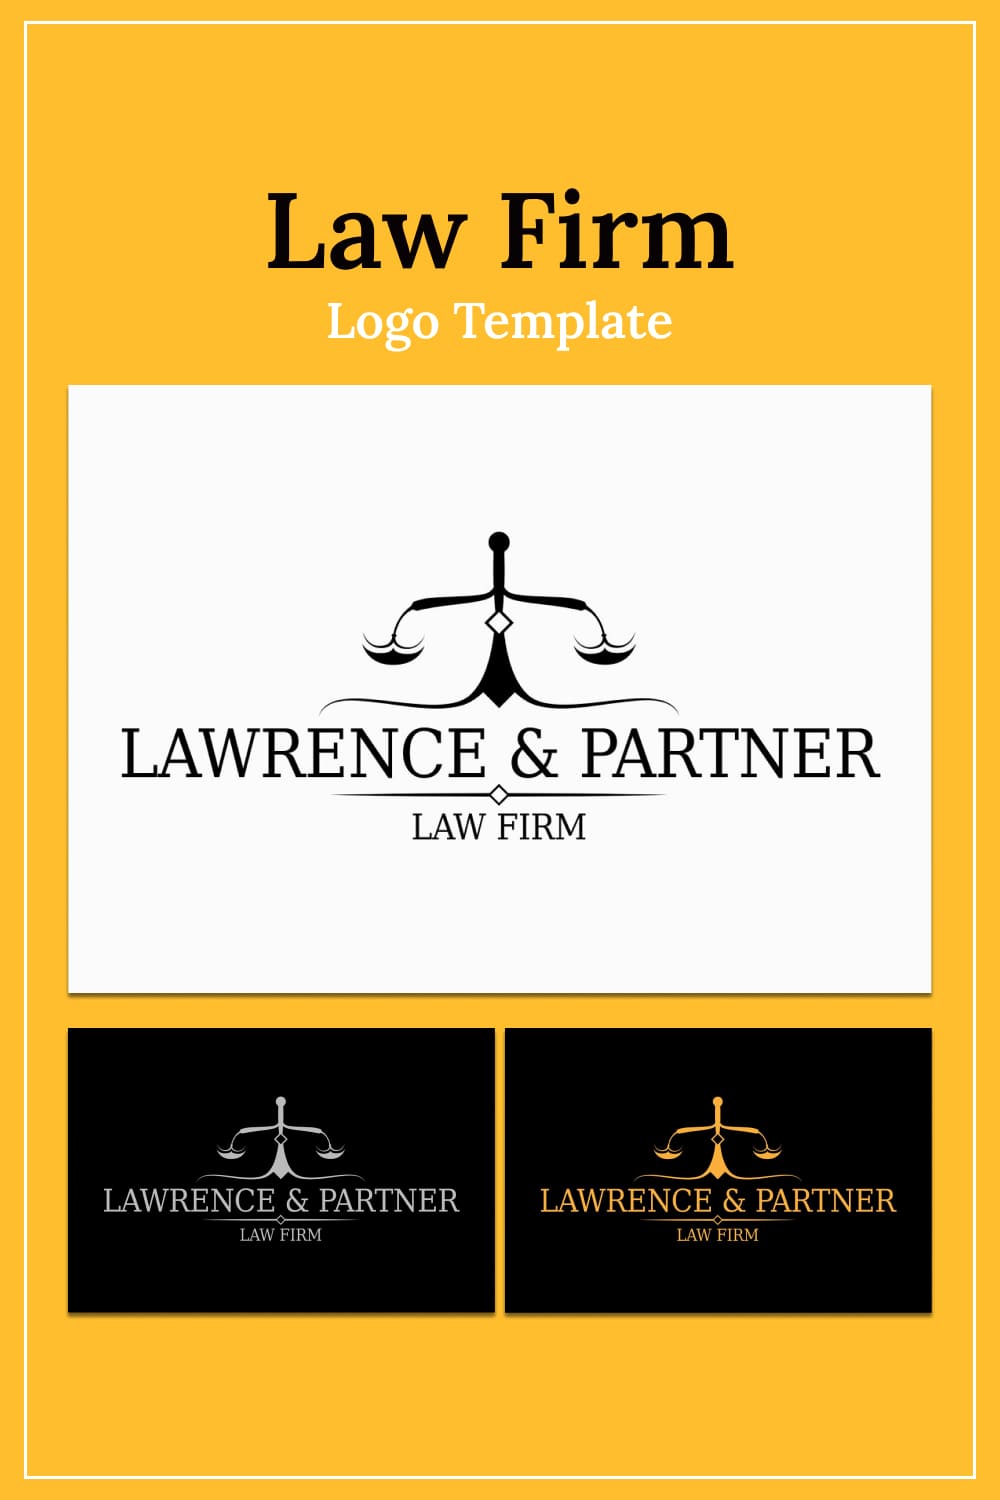 Original Law Firm Logo Template pinterest image.